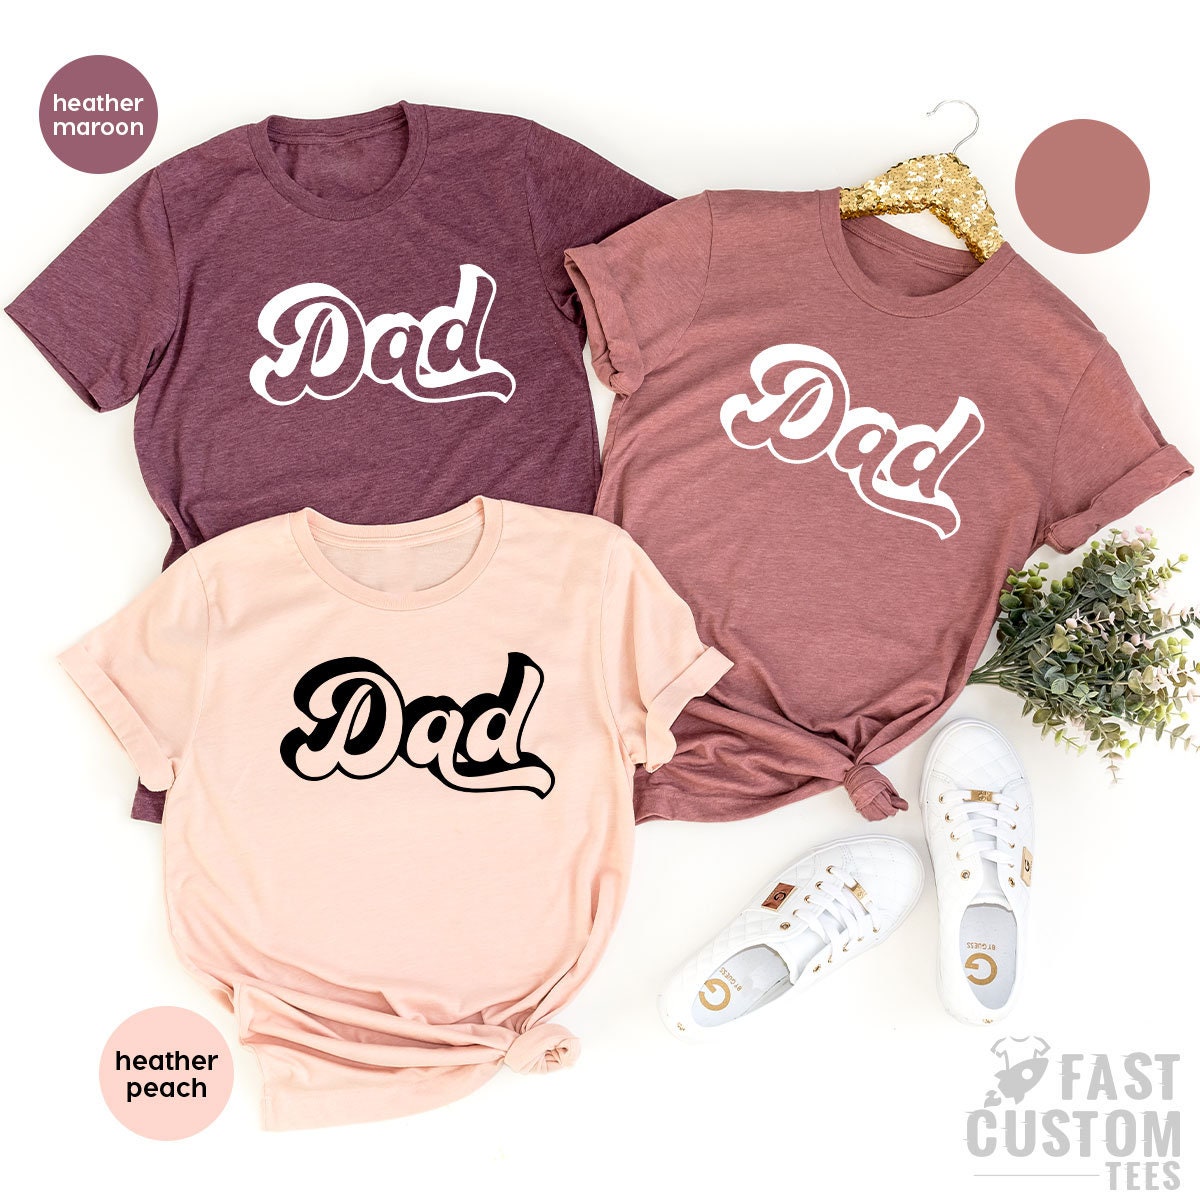 Dad TShirt, Cool Dad Shirt, Retro Dad Shirt, Father's Day Shirt, Dad Gift, Dad Birthday Gift, Daddy Shirt, Dad Shirt, New Dad Shirt, Dad Tee - Fastdeliverytees.com